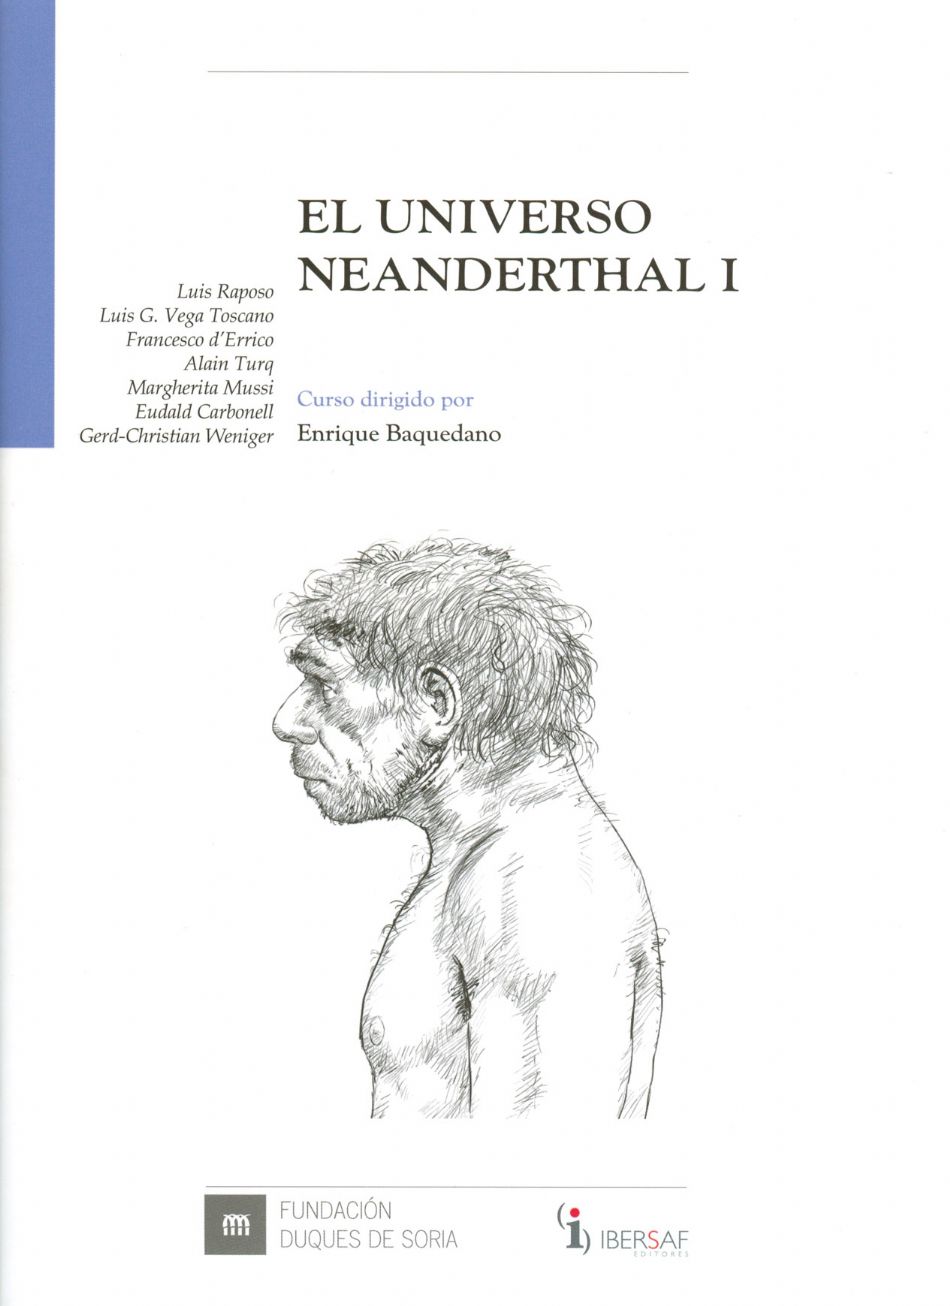 El Universo Neanderthal I